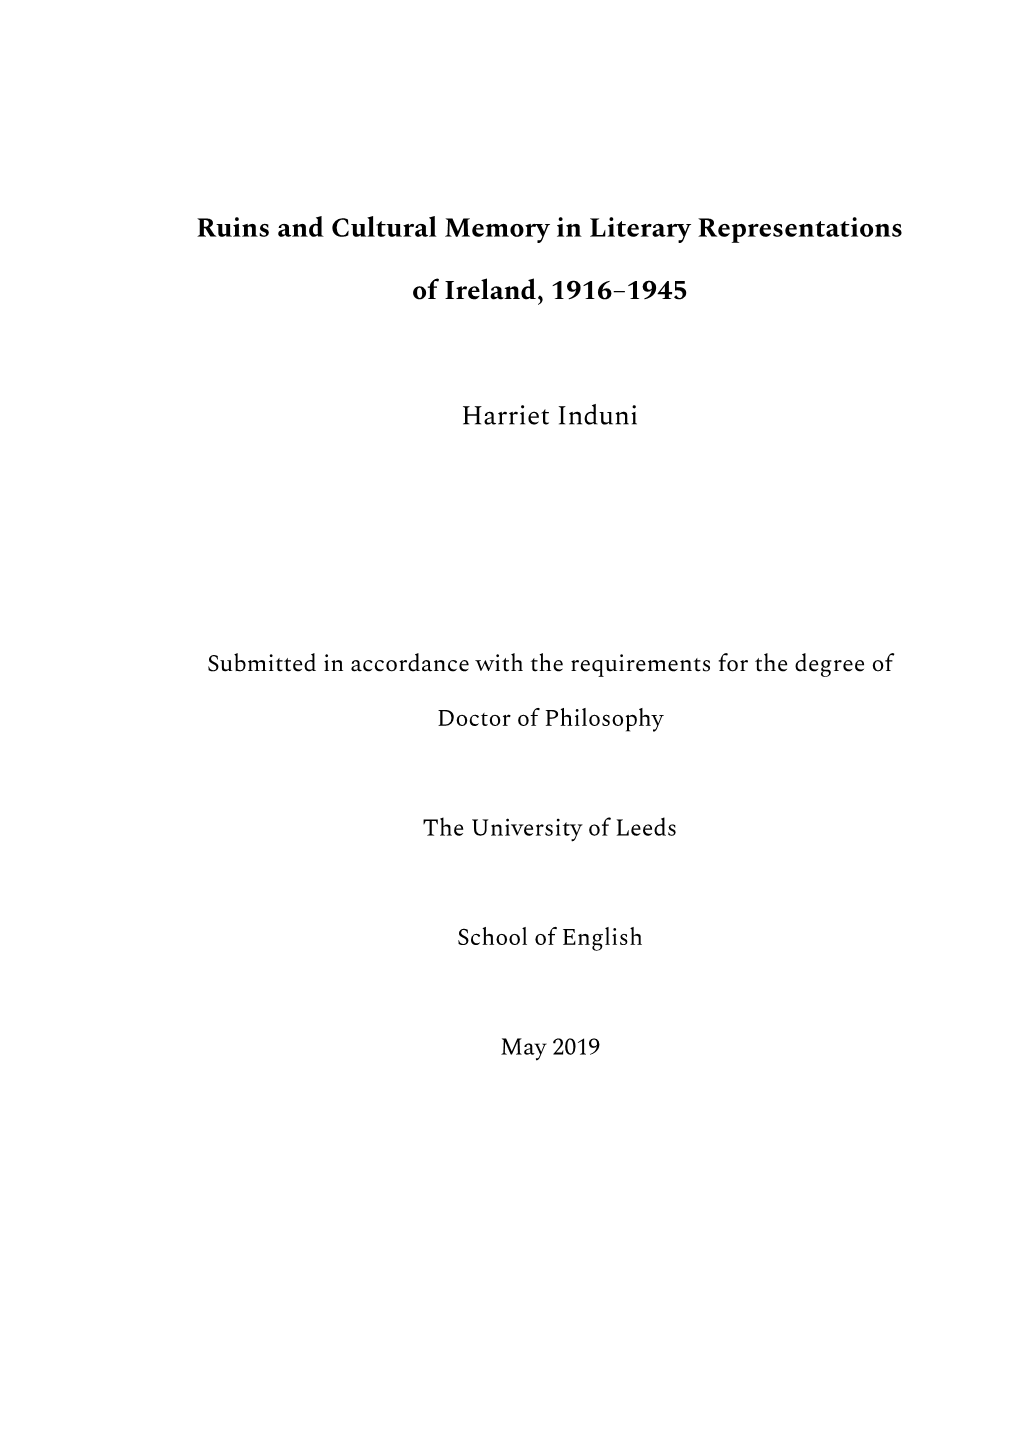 Ruins and Cultural Memory in Literary Representations of Ireland, 1916